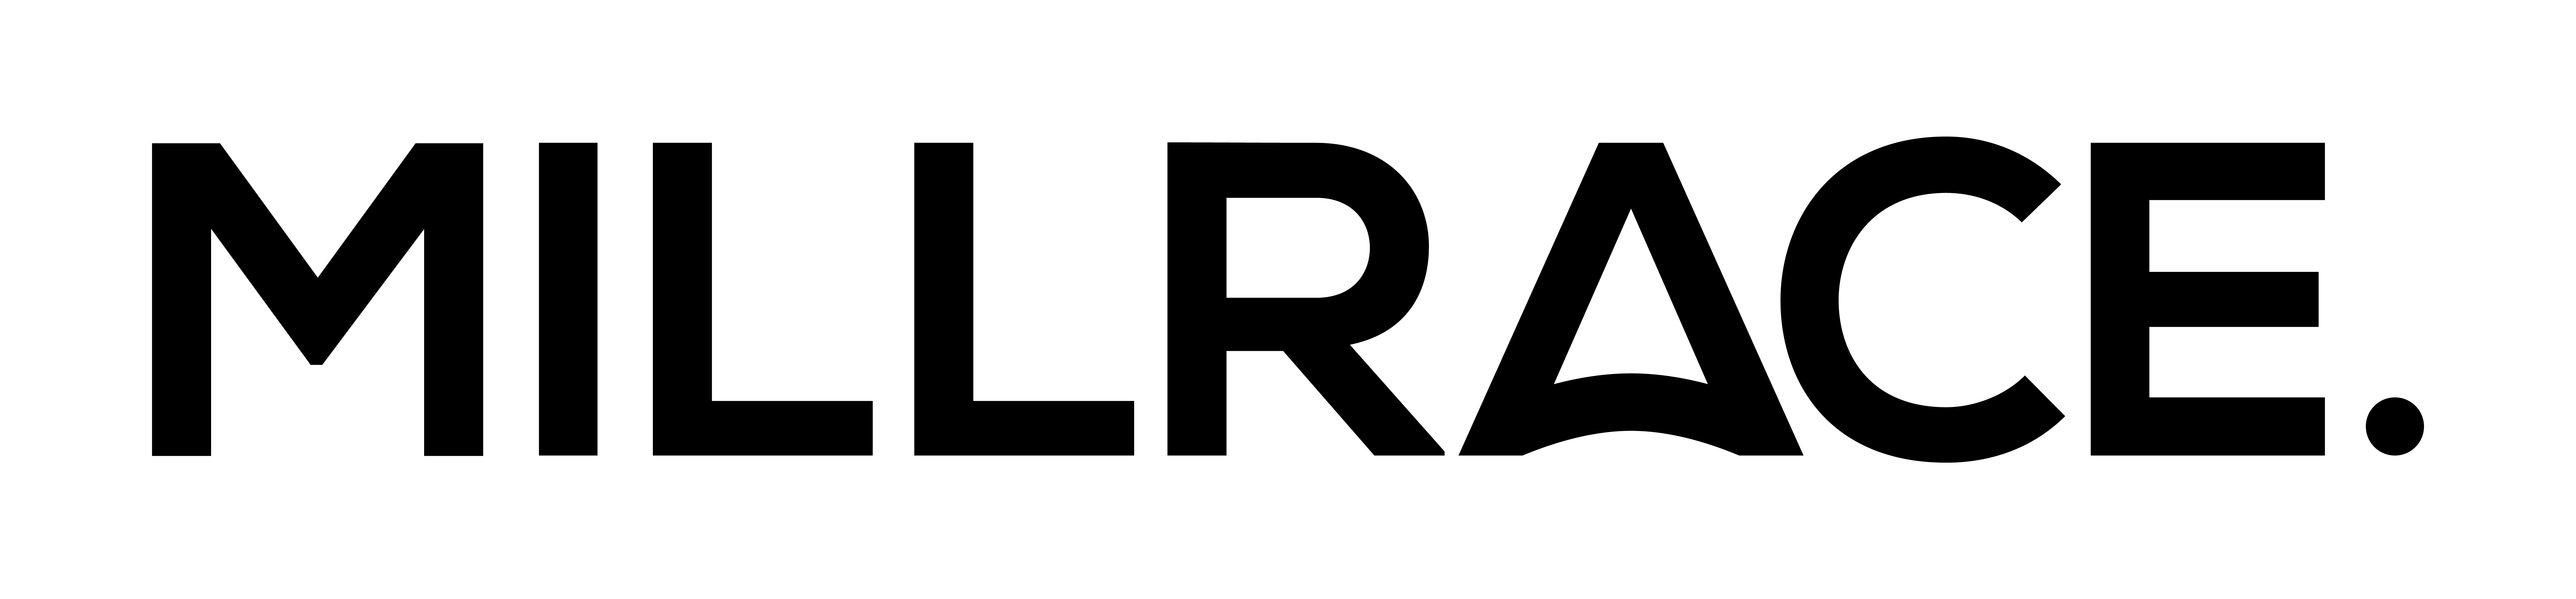 Millrace Marketing Logo